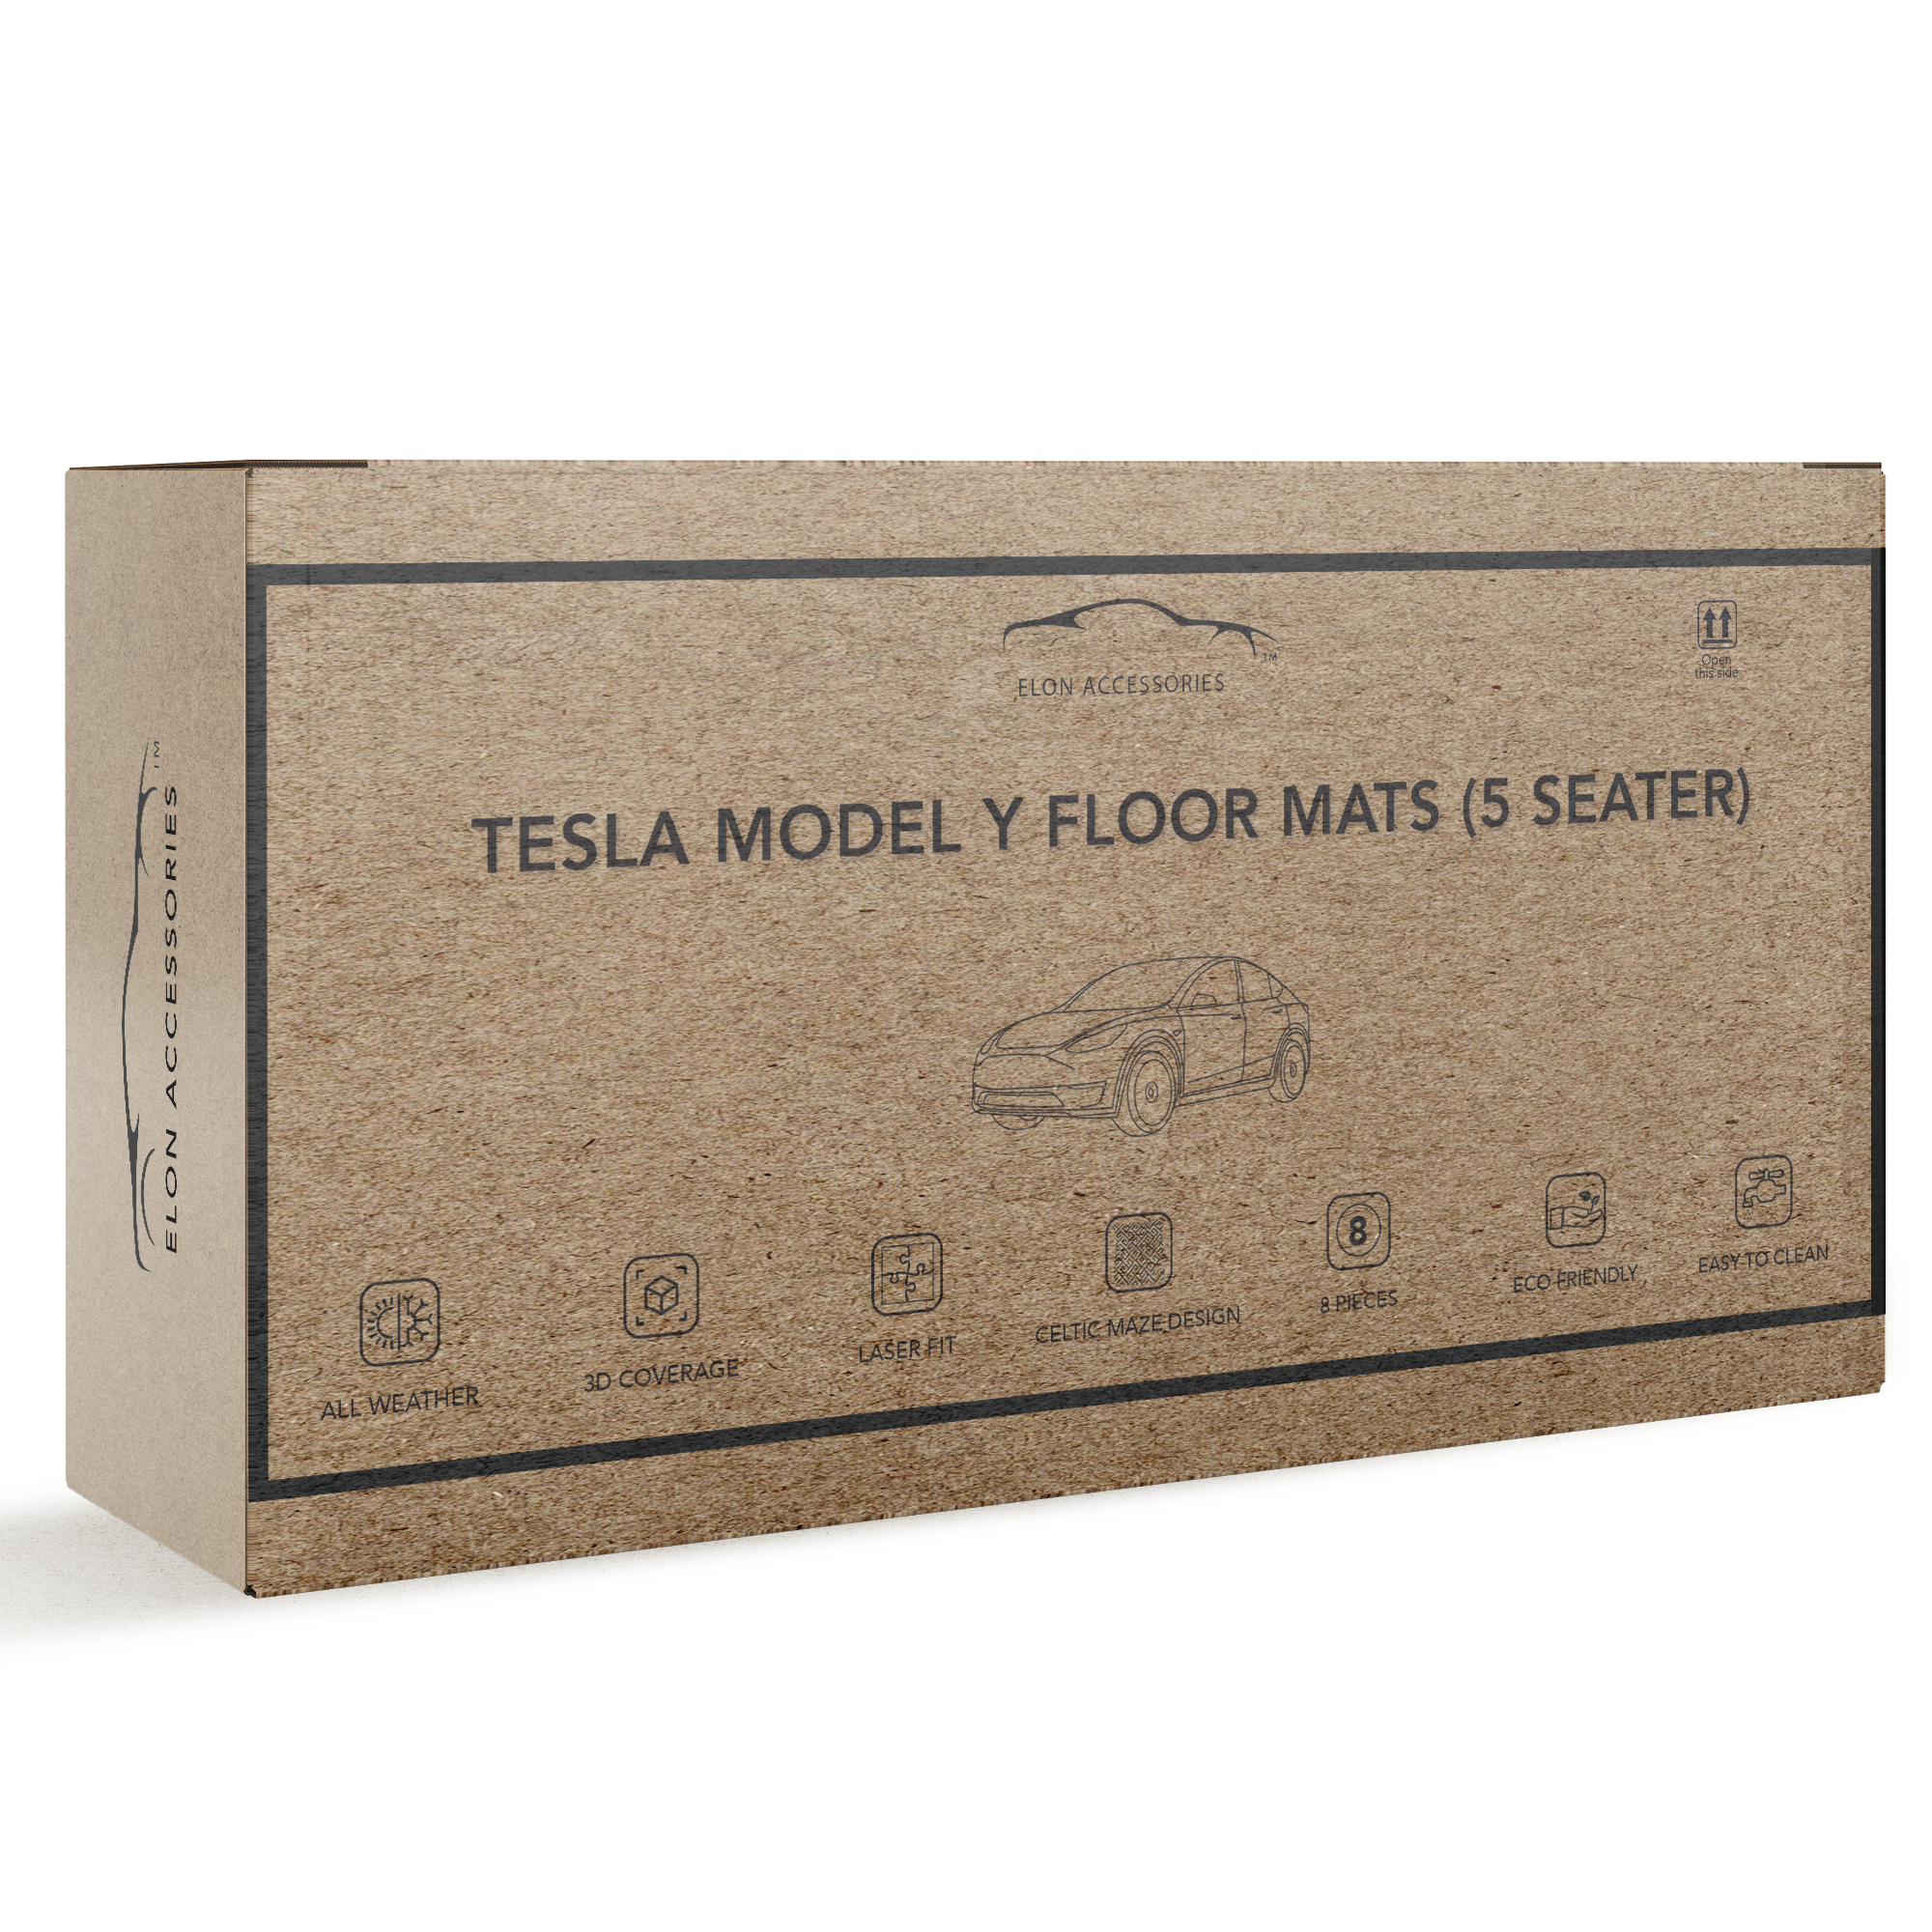 All-Weather, 3D Fit, Tesla Model Y Floor Mats (5-Seater): Complete